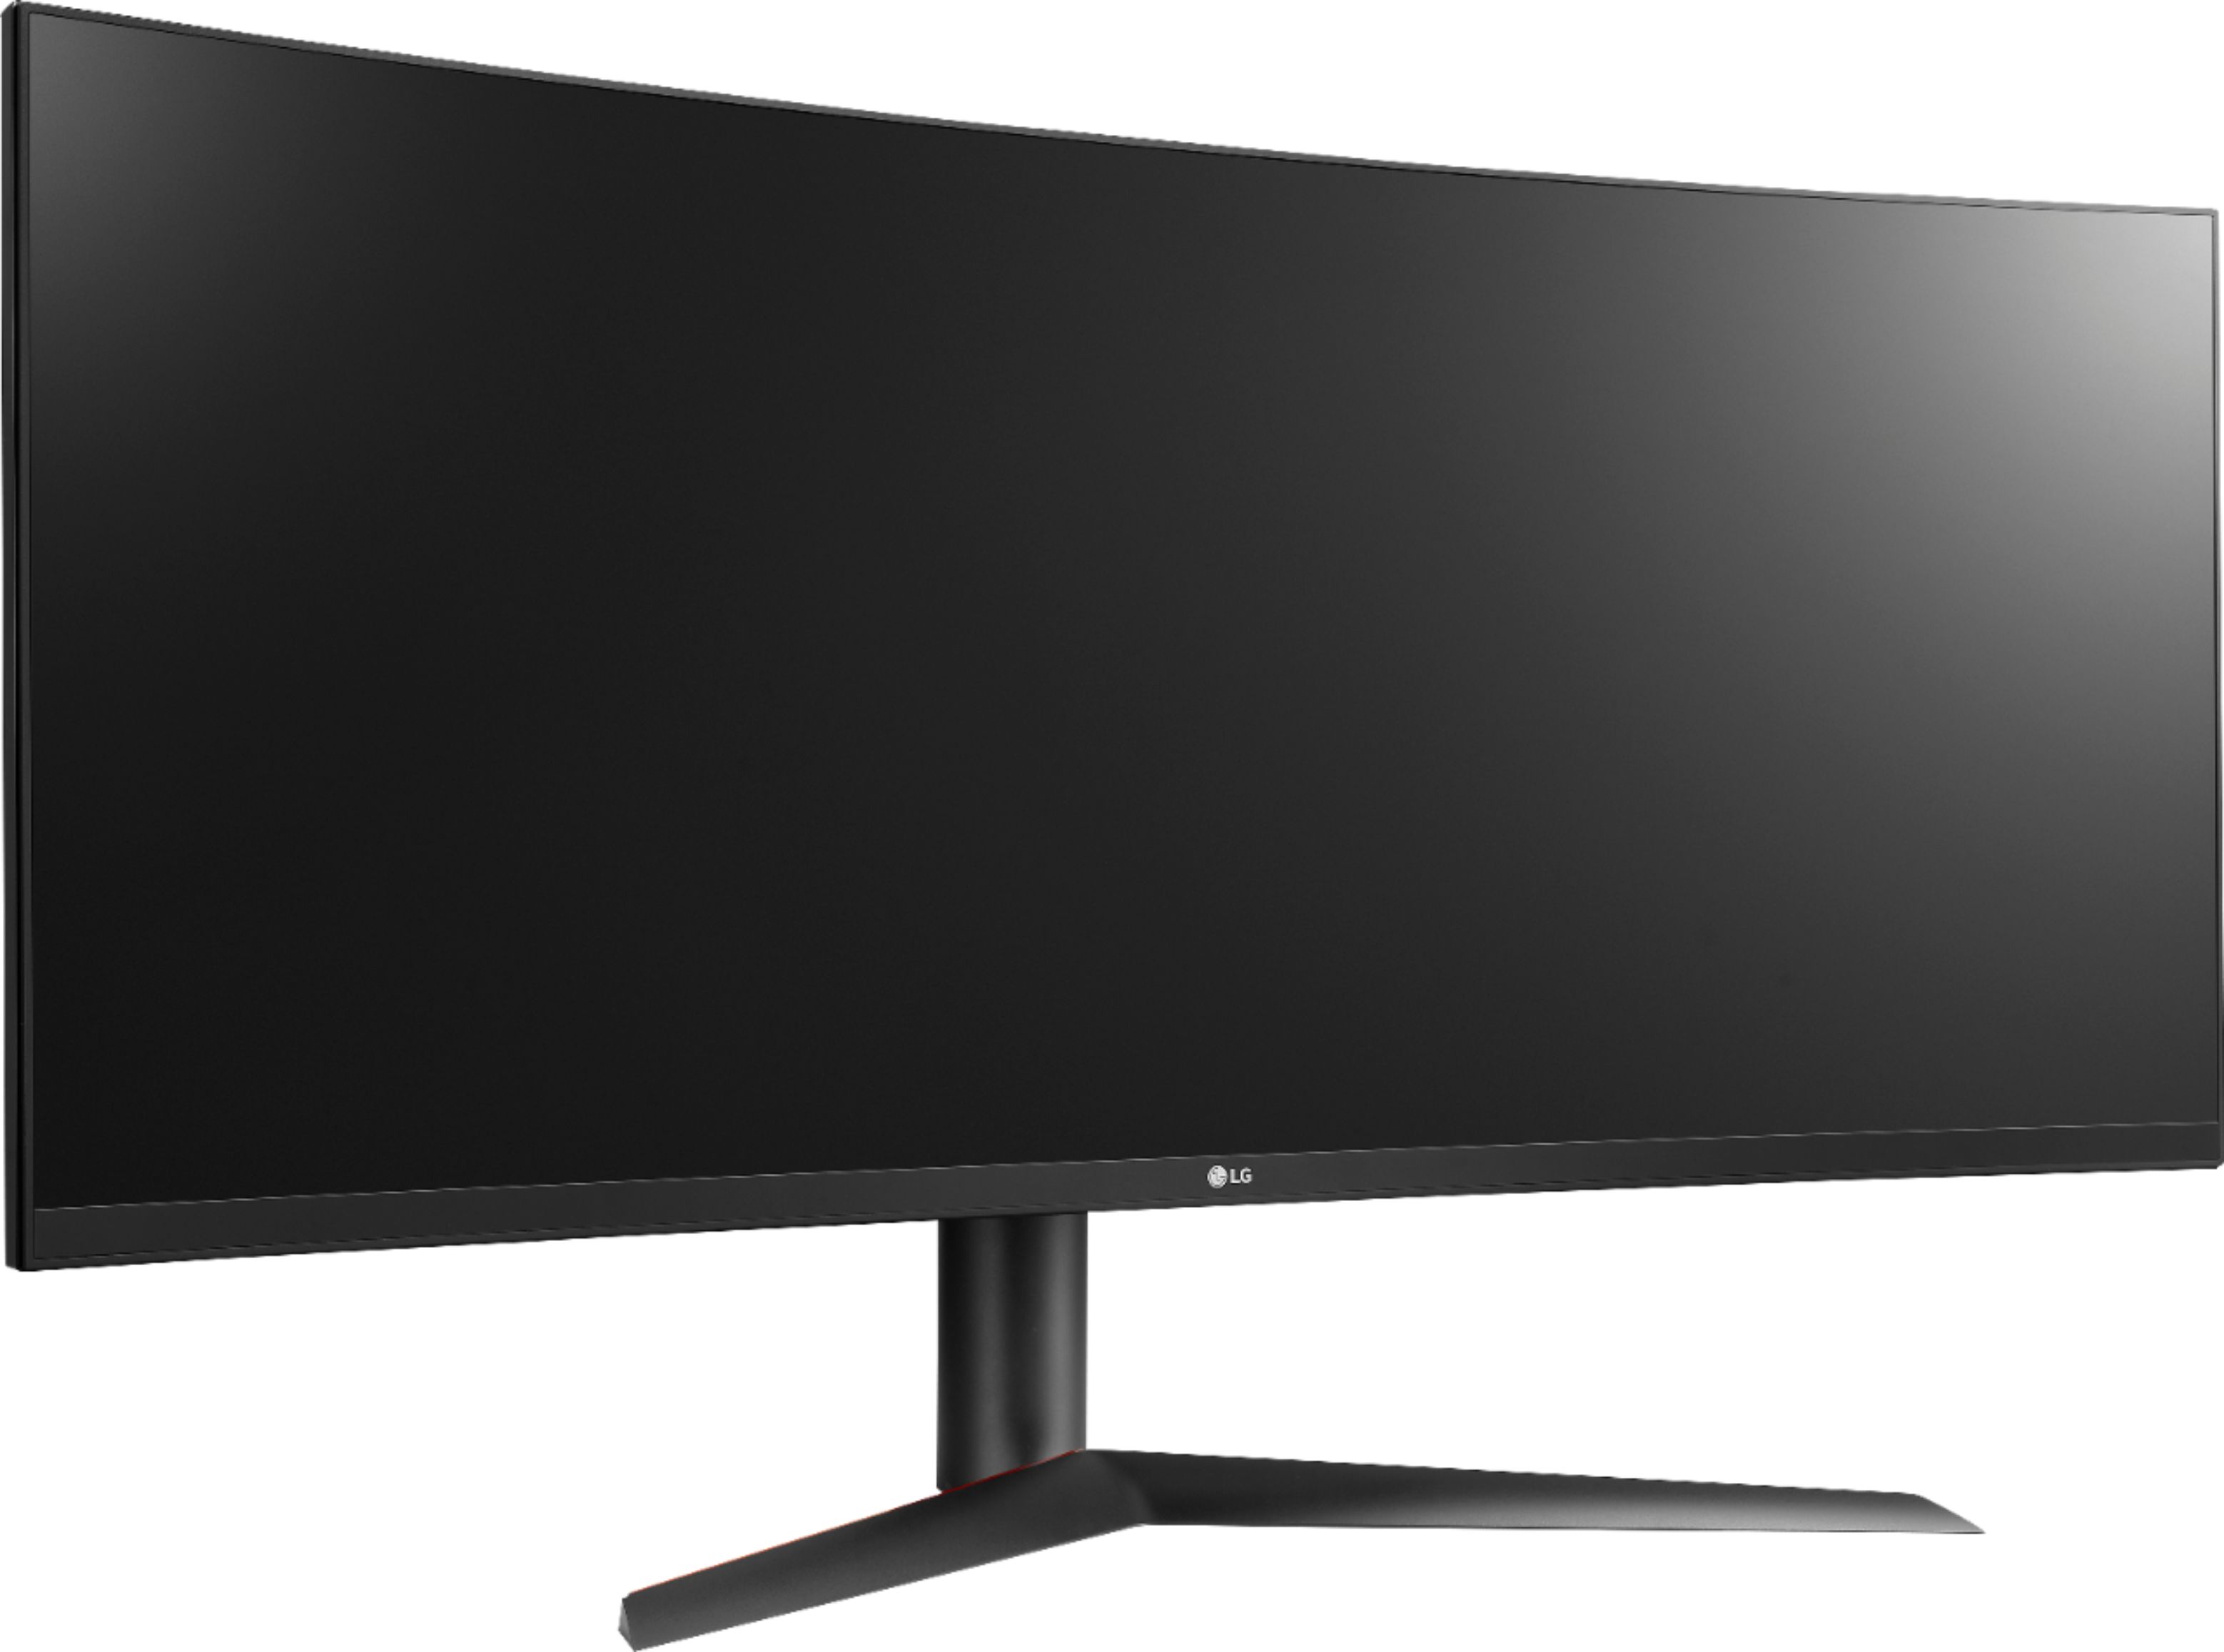 Angle View: Dell P2419HC Widescreen LCD Monitor - Black - Black